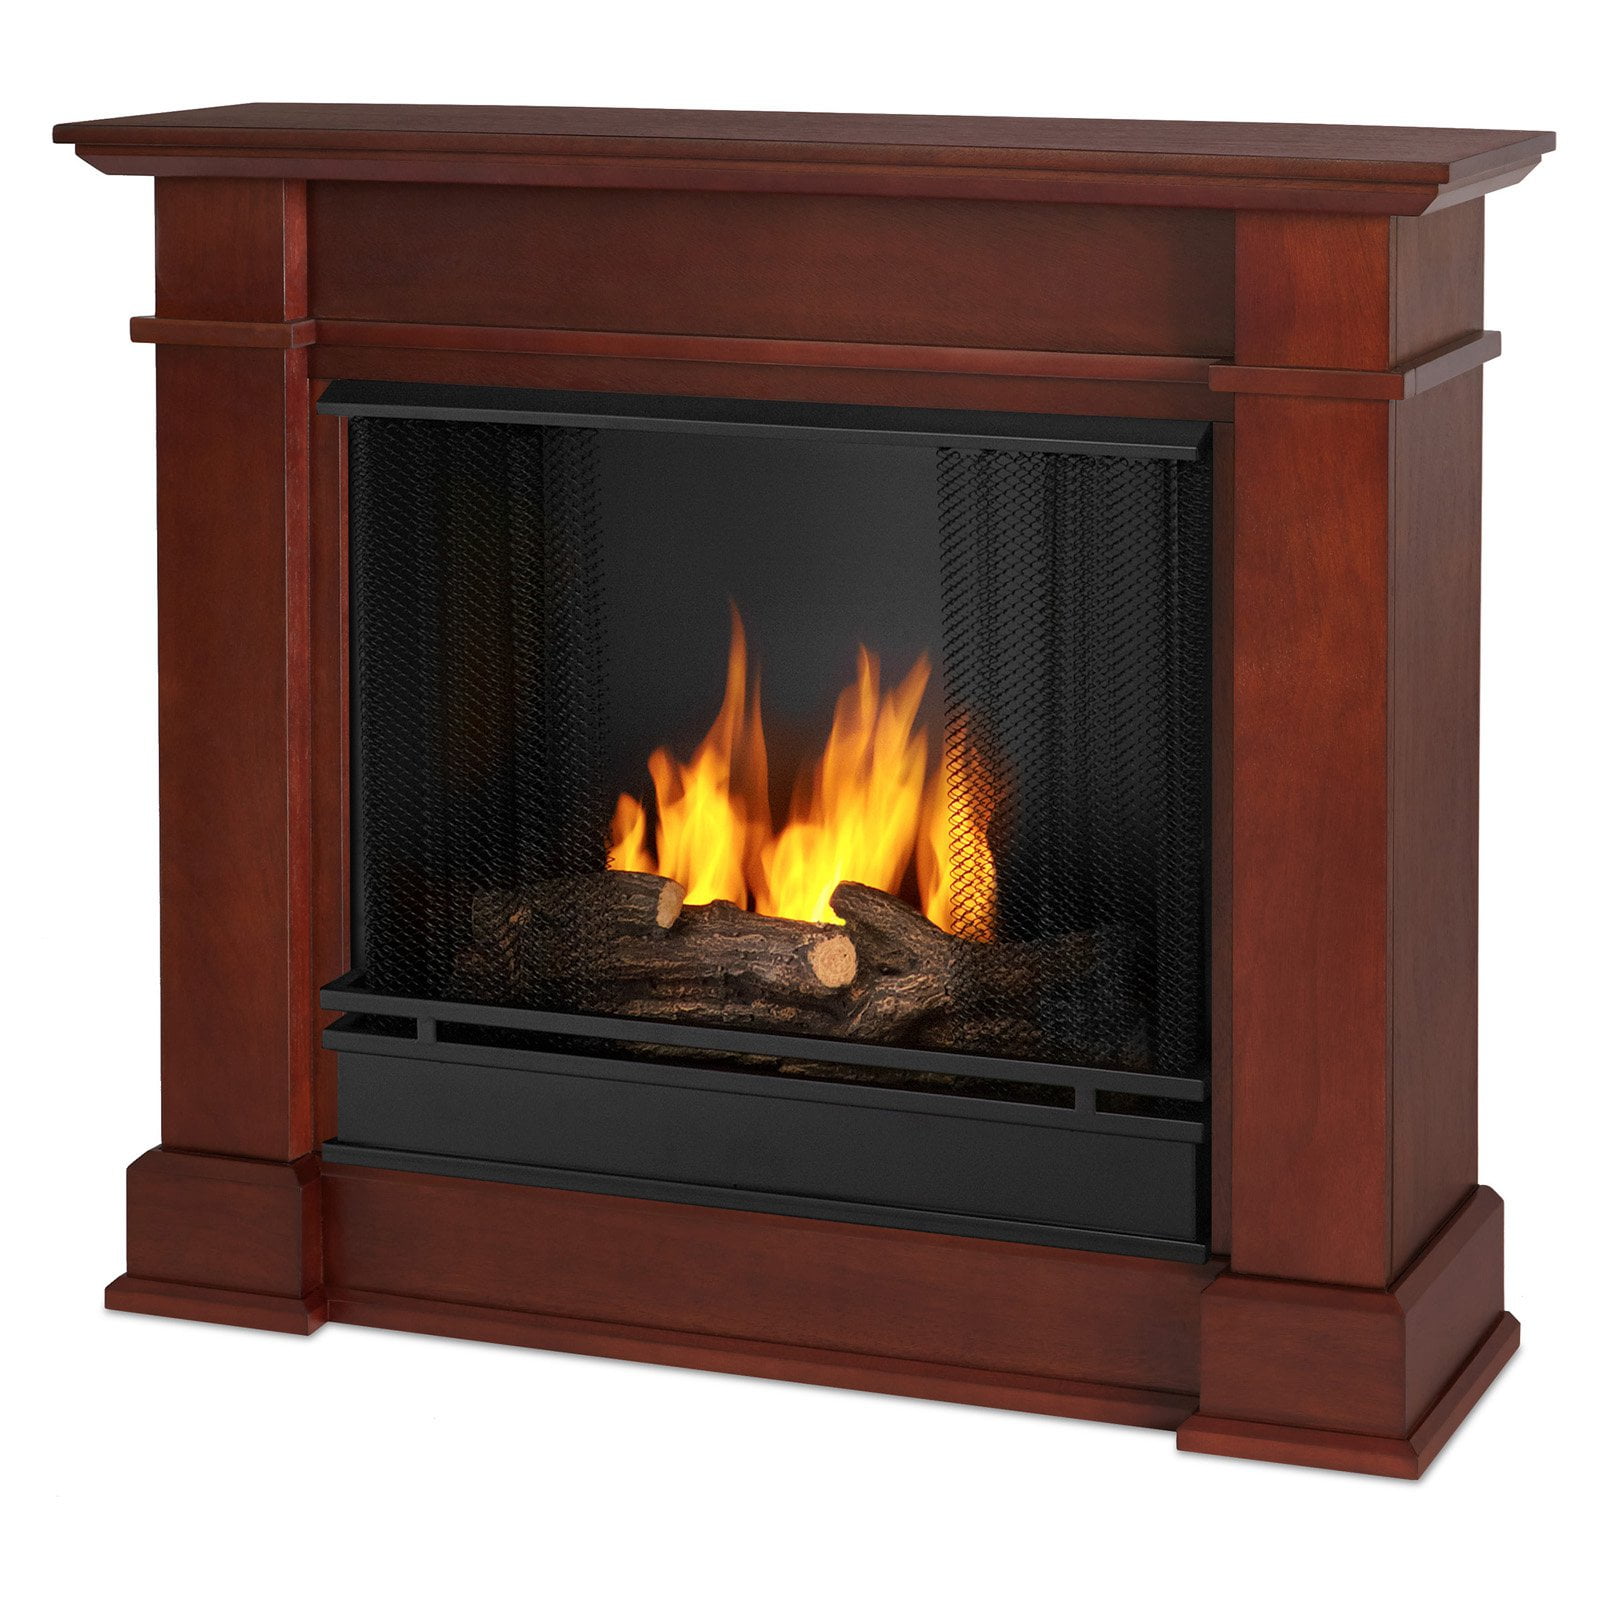 Real Flame Devin Ventless Gel Fireplace - Walmart.com - Walmart.com